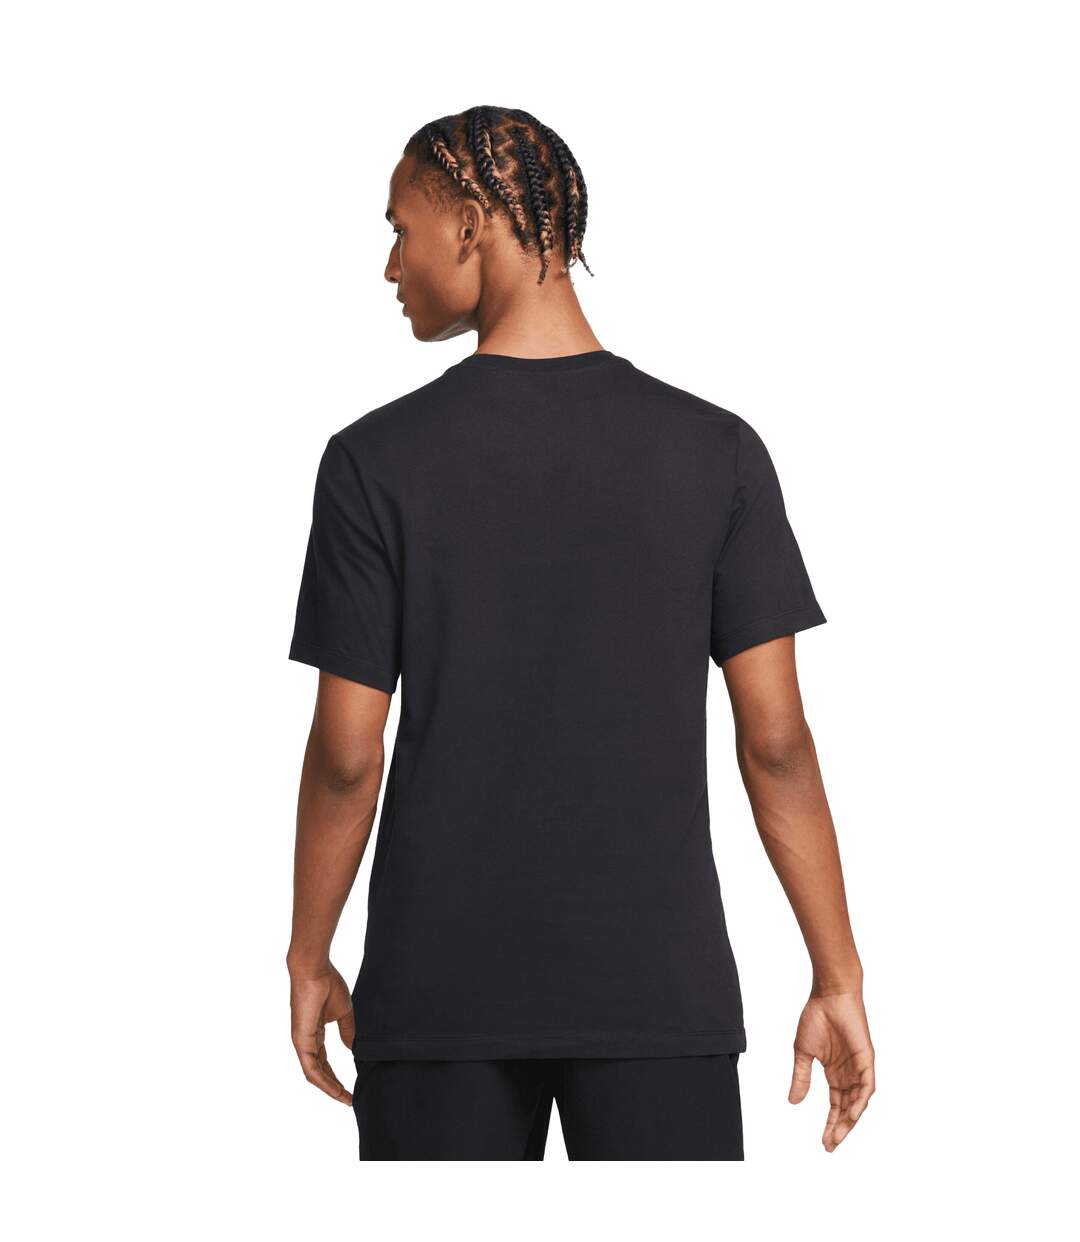 Nike Golf Mens T-Shirt (Black)